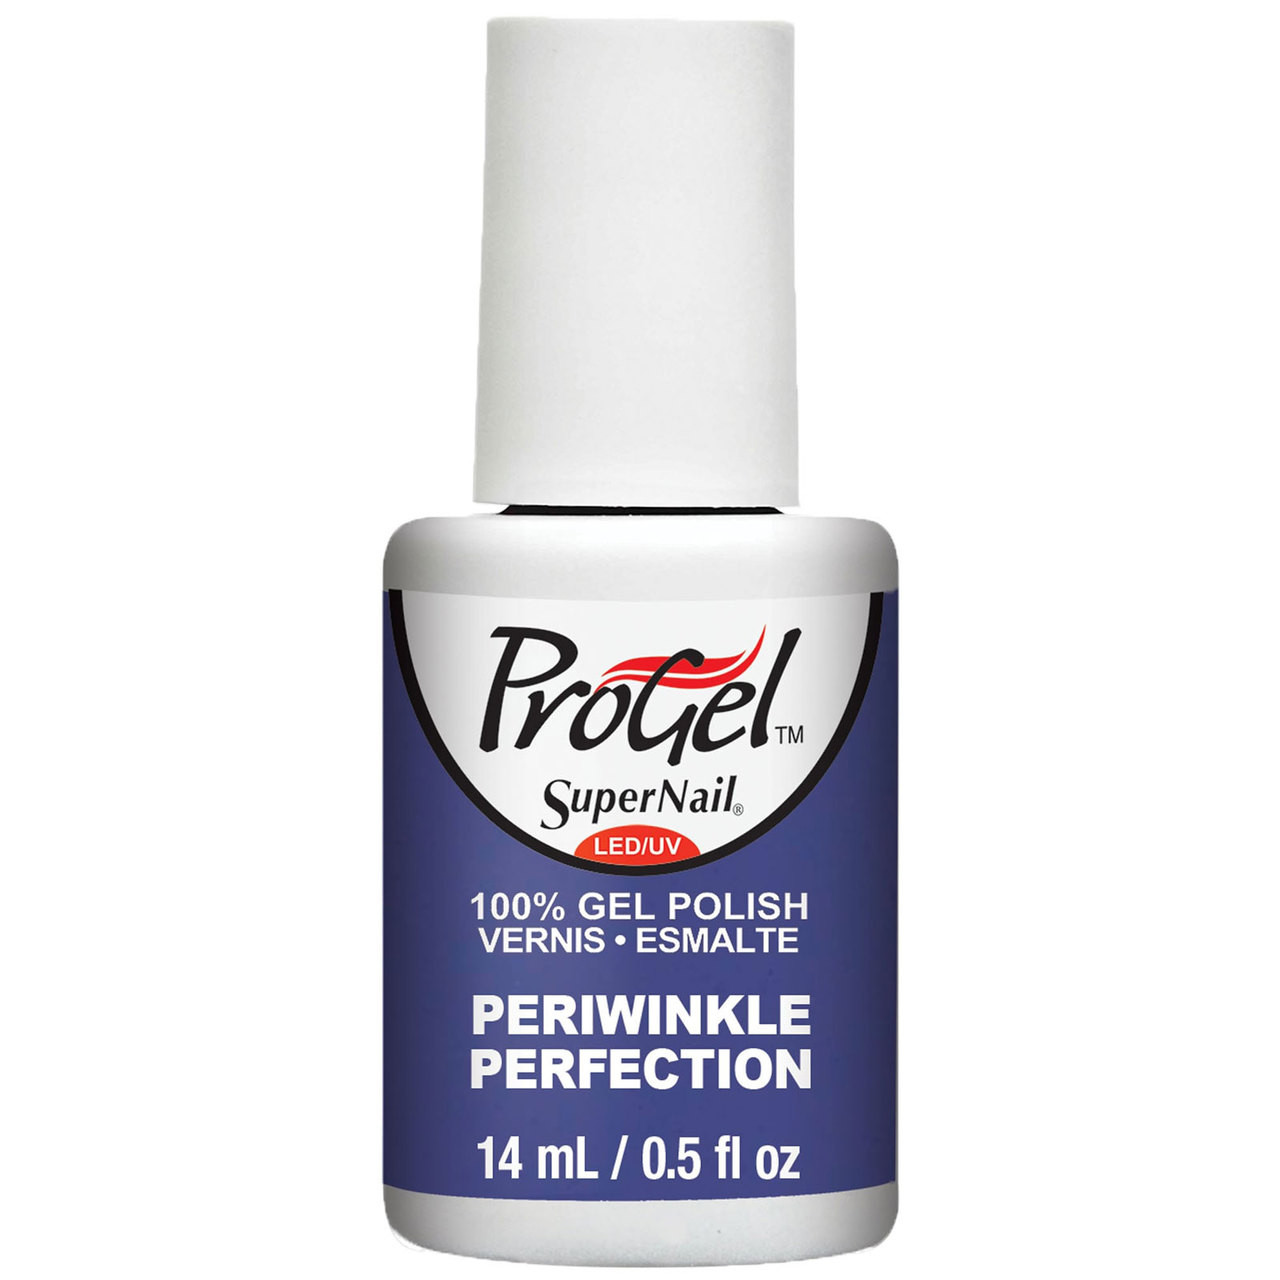 SuperNail ProGel Polish Periwinkle Perfection - .5 oz